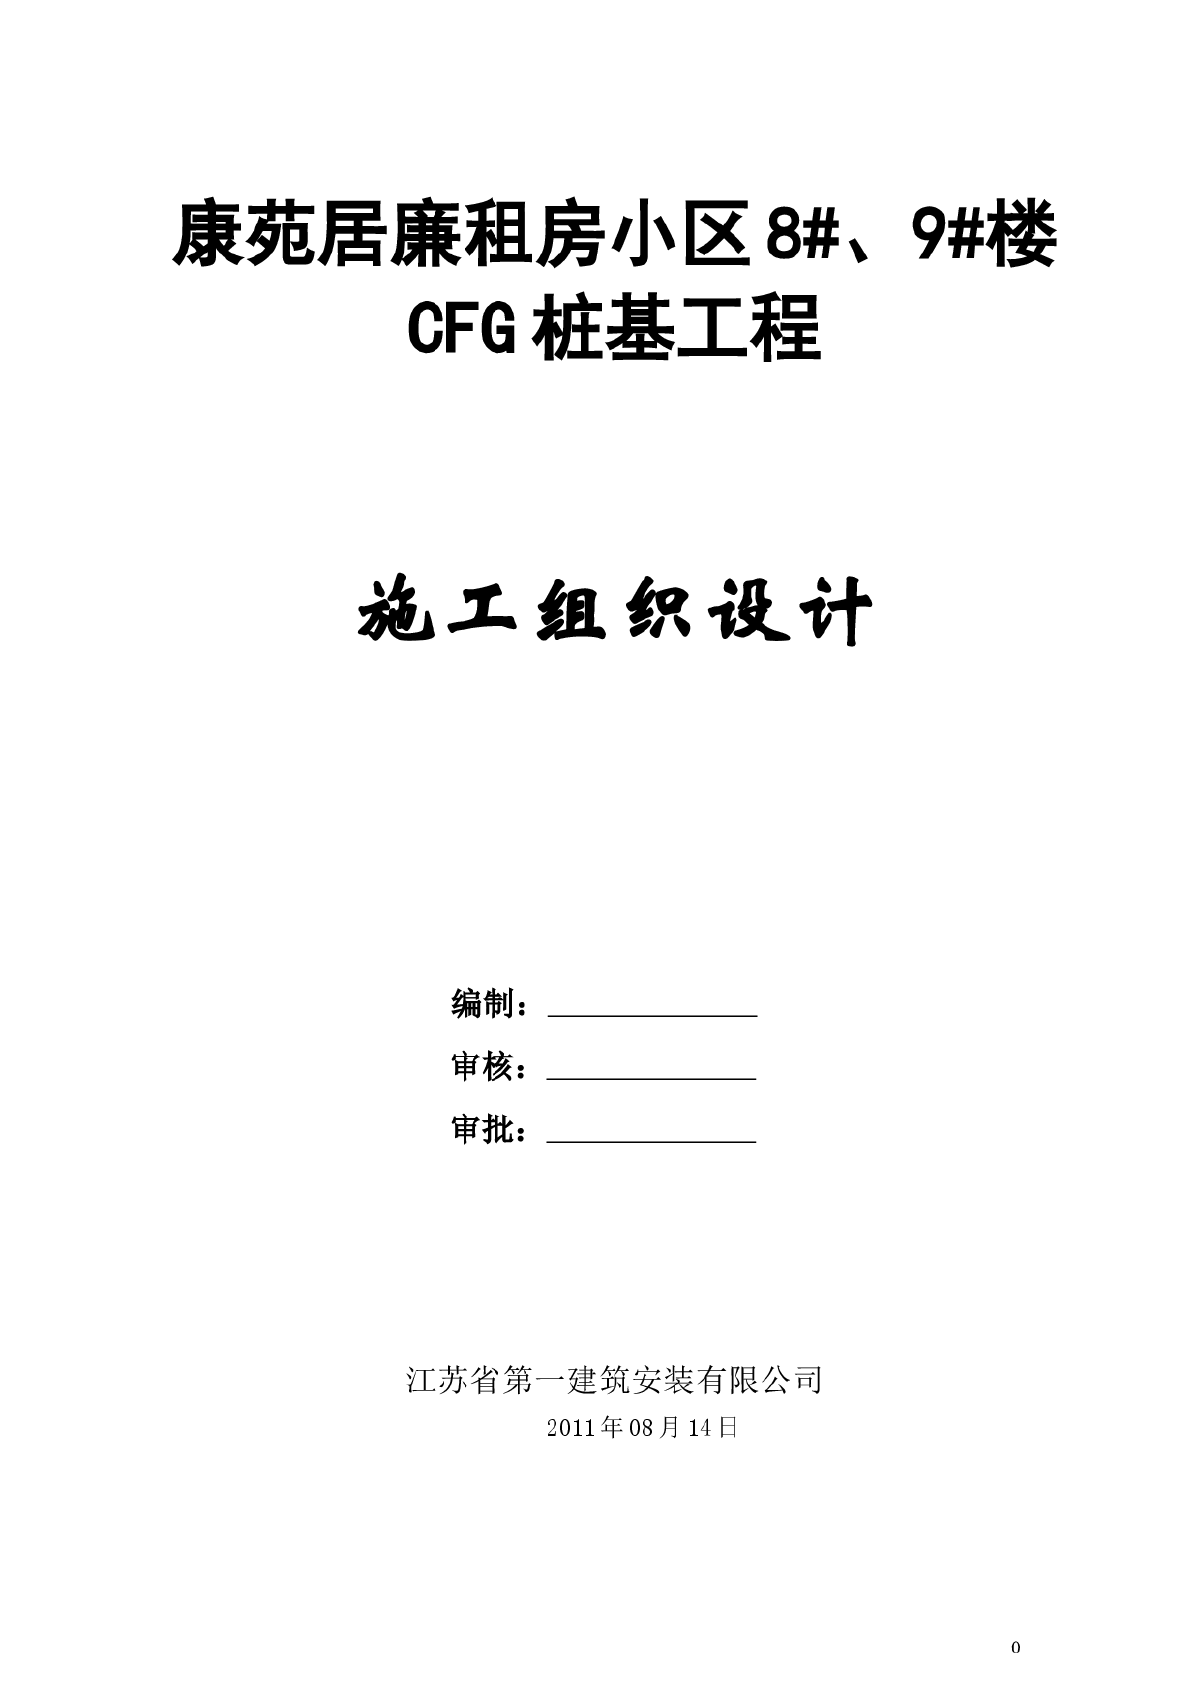 CFG桩基工程施工组织设计-图一